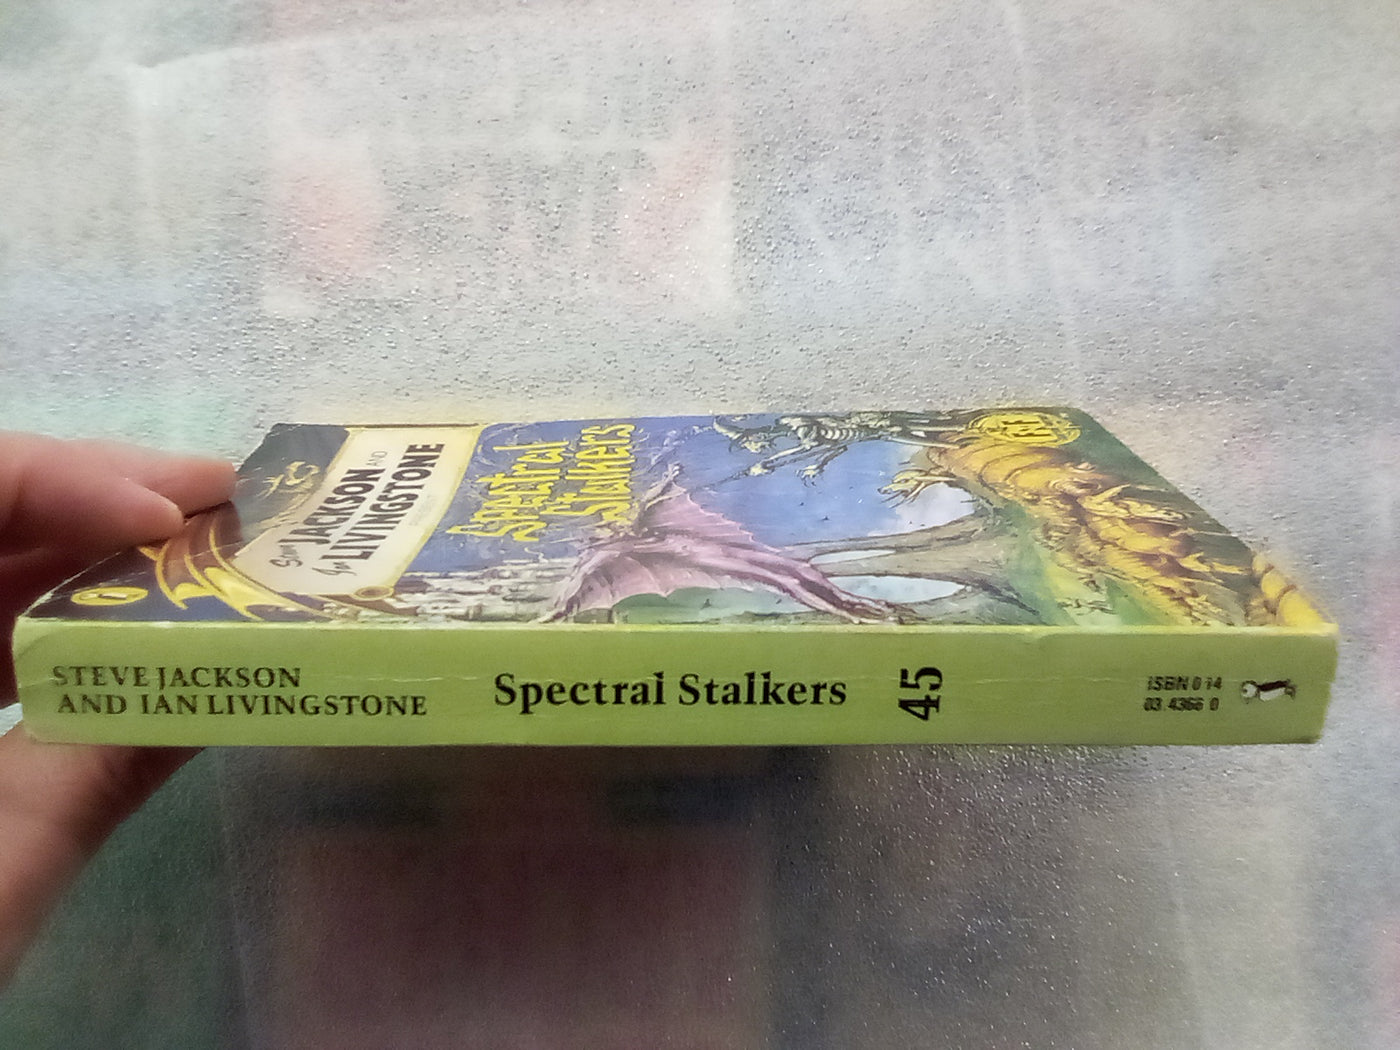 Spectral Stalkers - Fighting Fantasy #45 (Steve Jackson and Ian Livingstone)